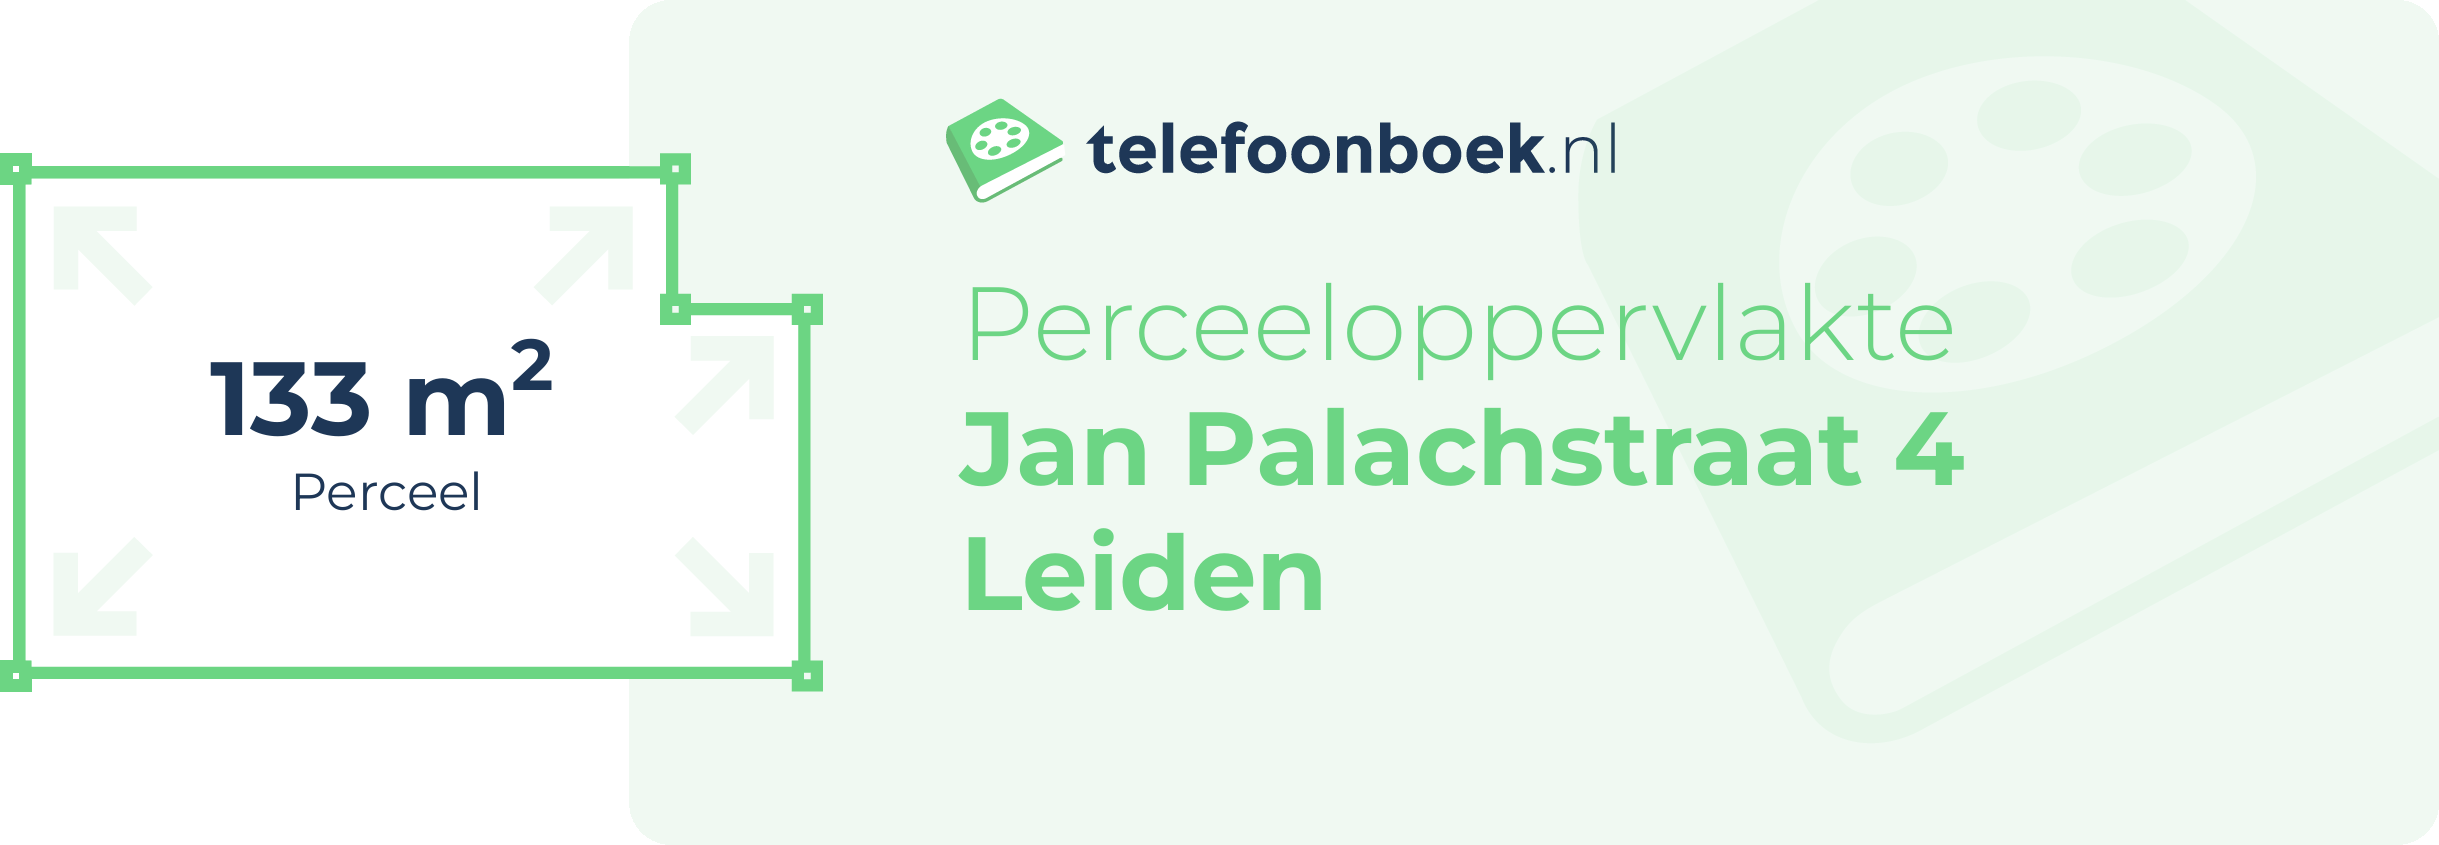 Perceeloppervlakte Jan Palachstraat 4 Leiden